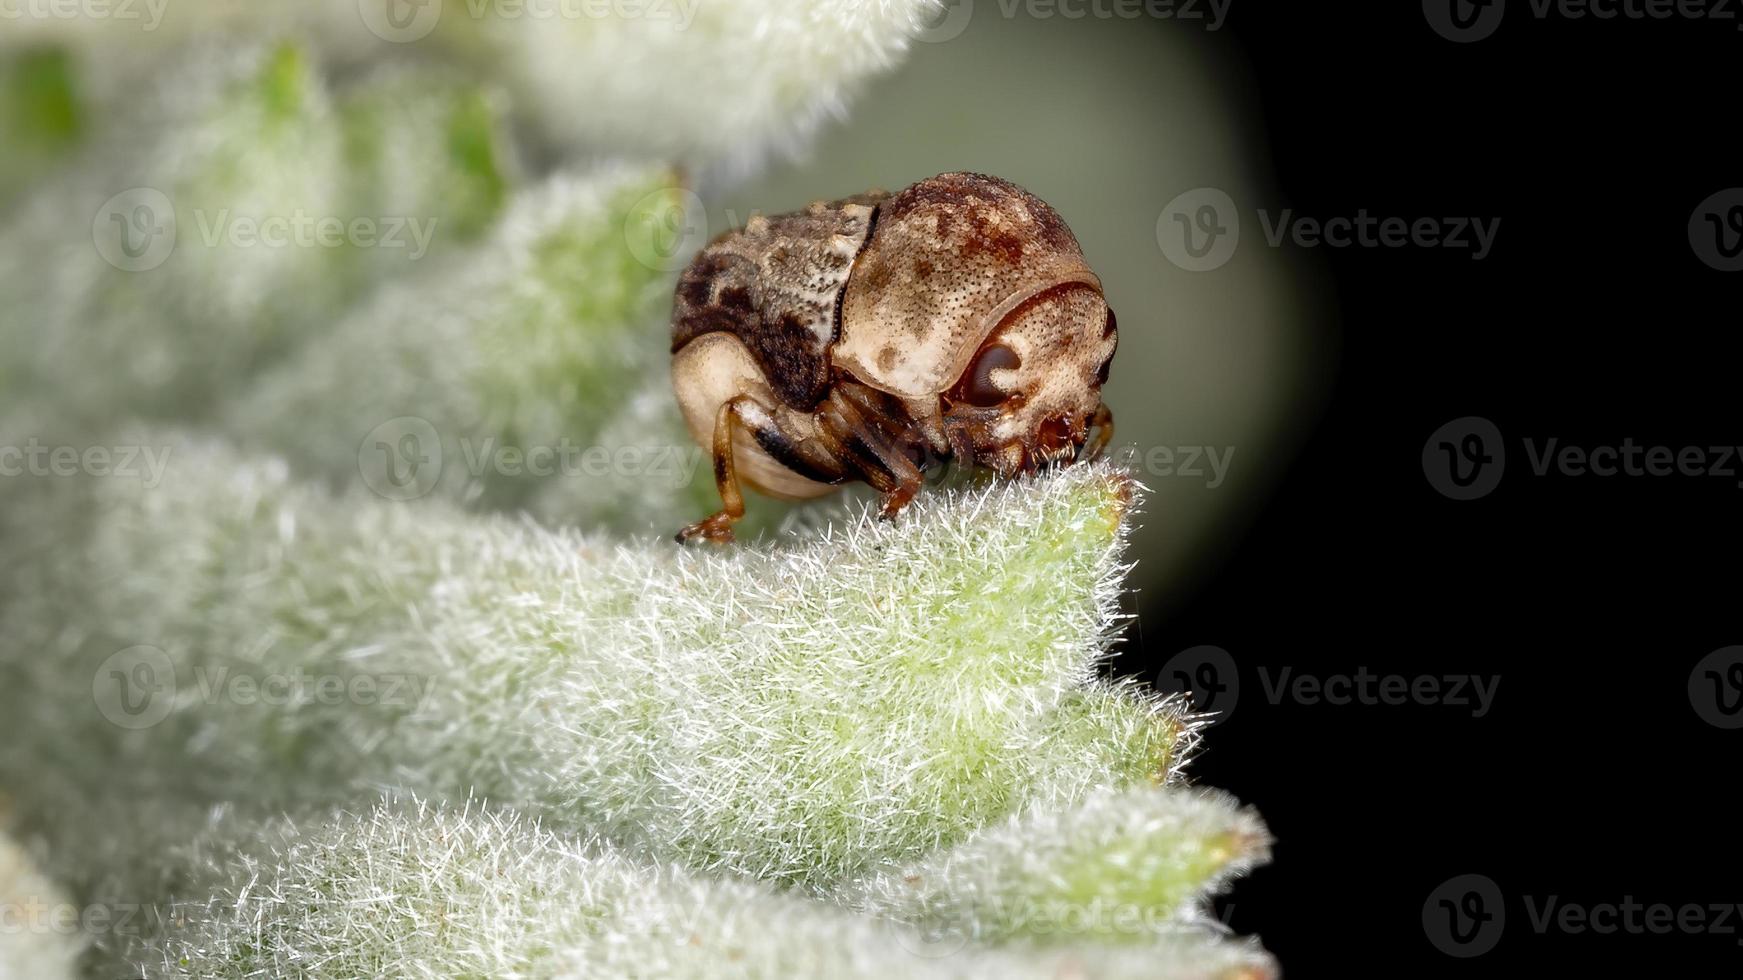 Warty Leaf Beetle photo